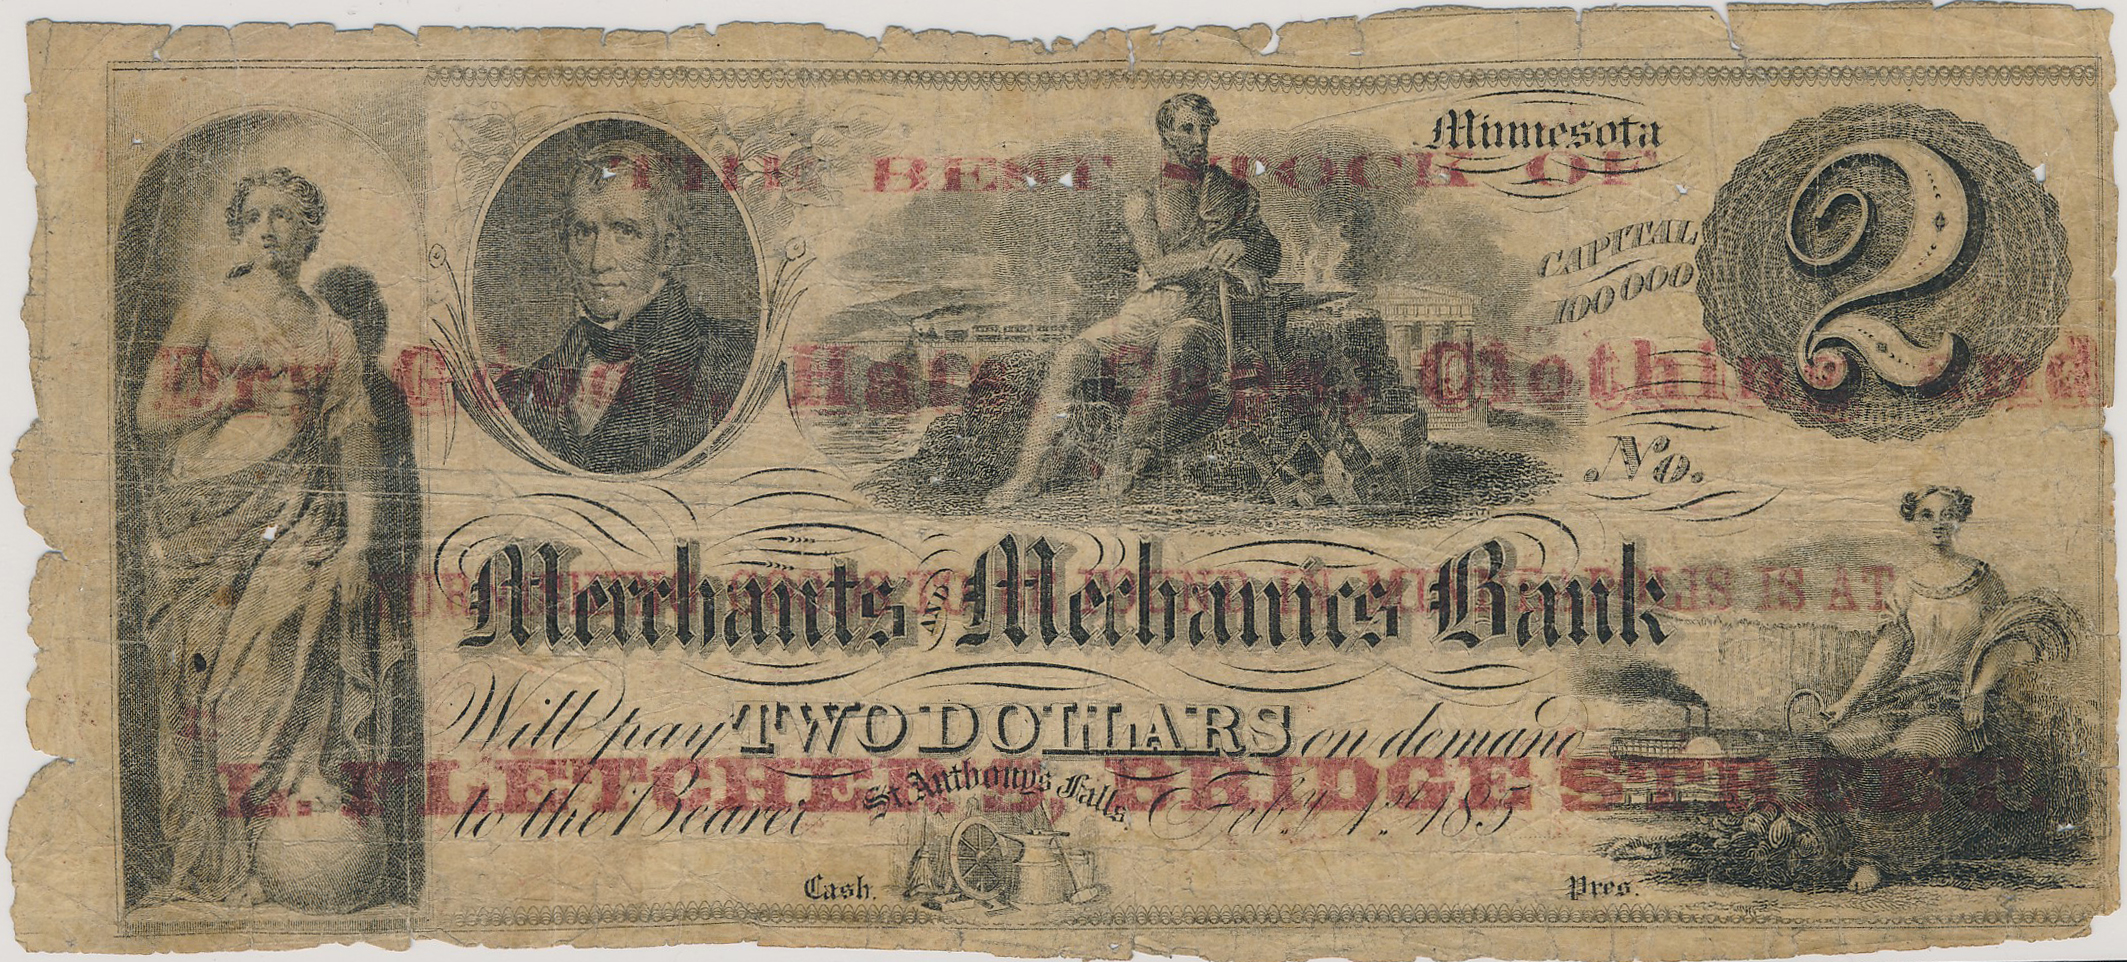 L. Fletcher overprint on $2 Merchants and Mechanics Bank